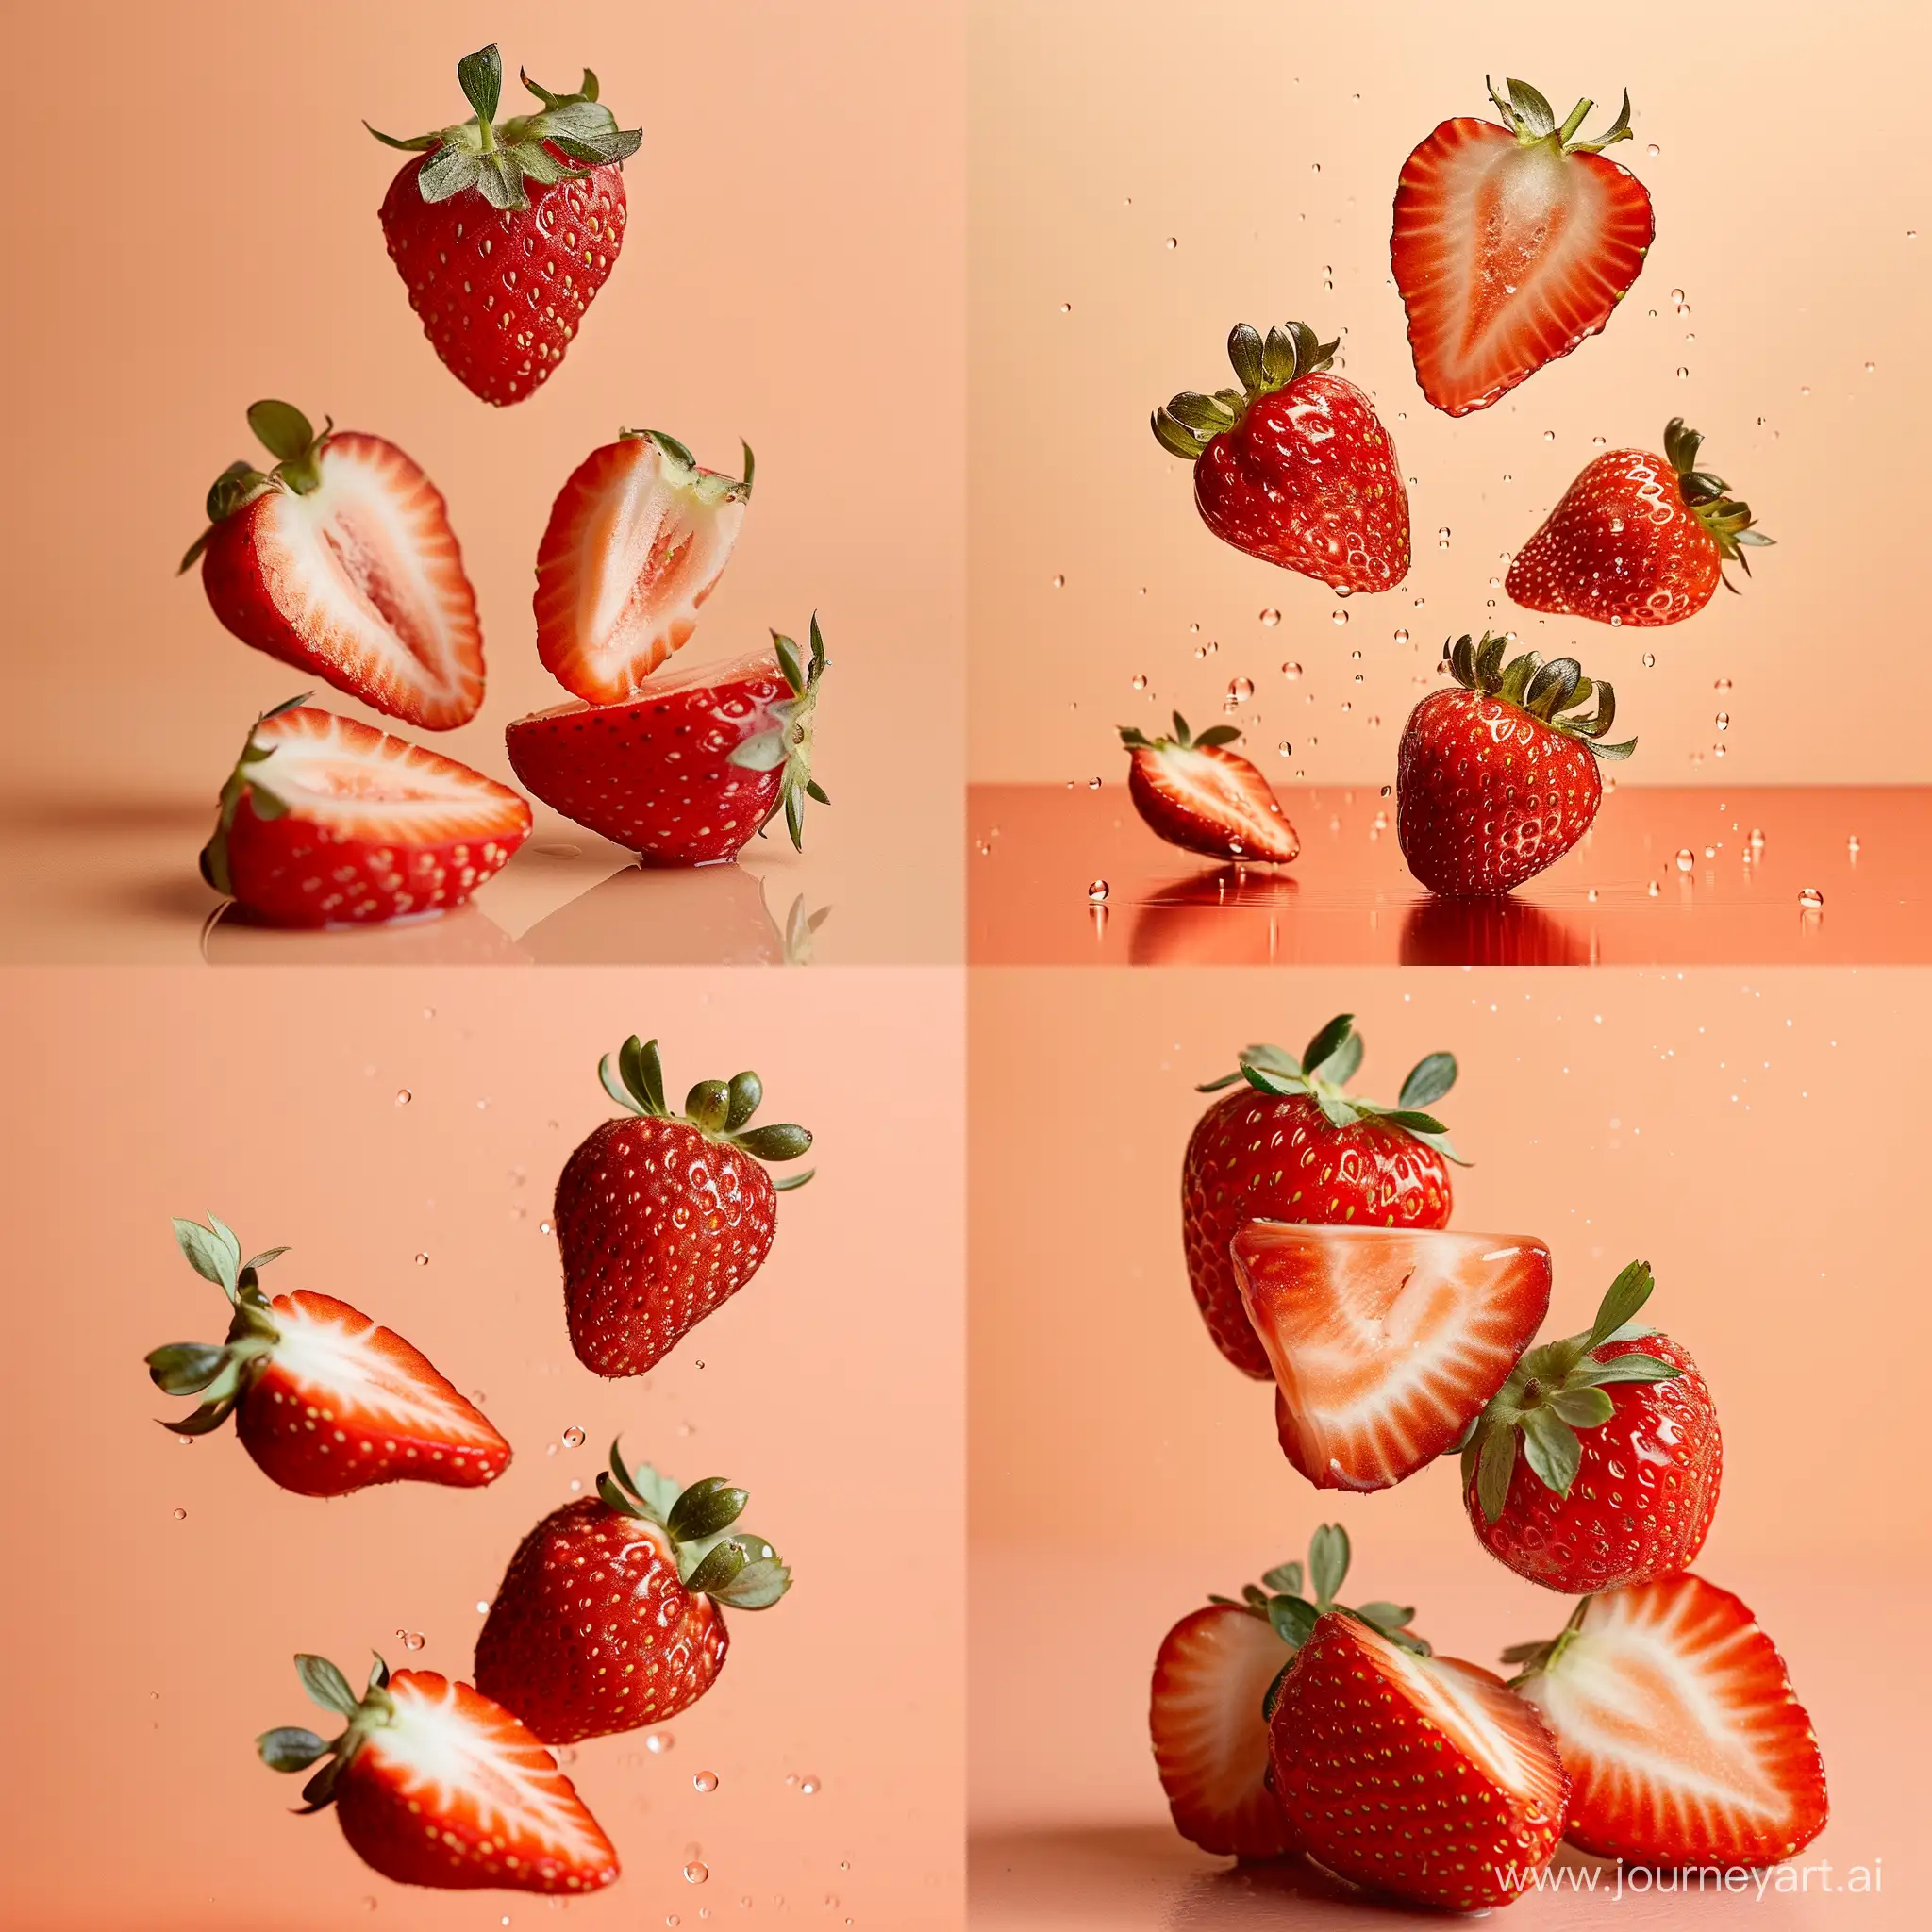 Sliced-Strawberries-in-Playful-Minimalist-Motion